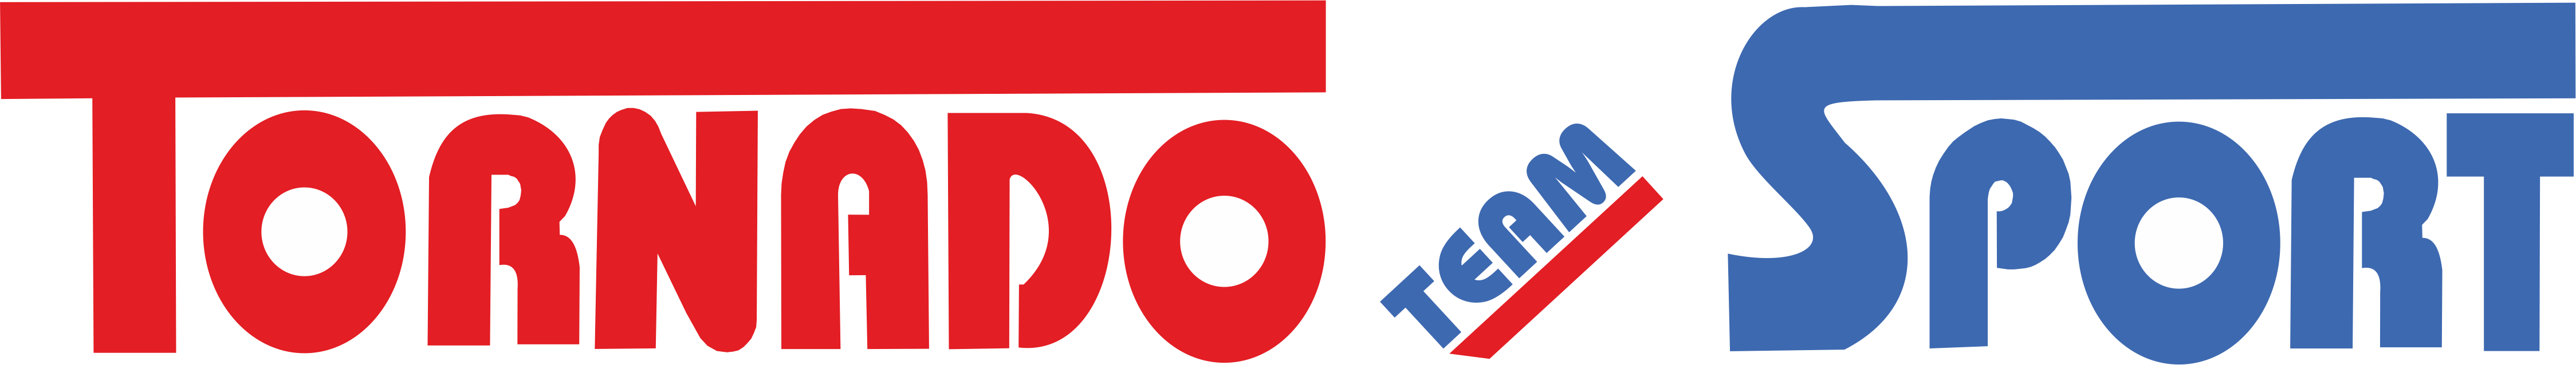 BERLIN KOBRAS Logo 2